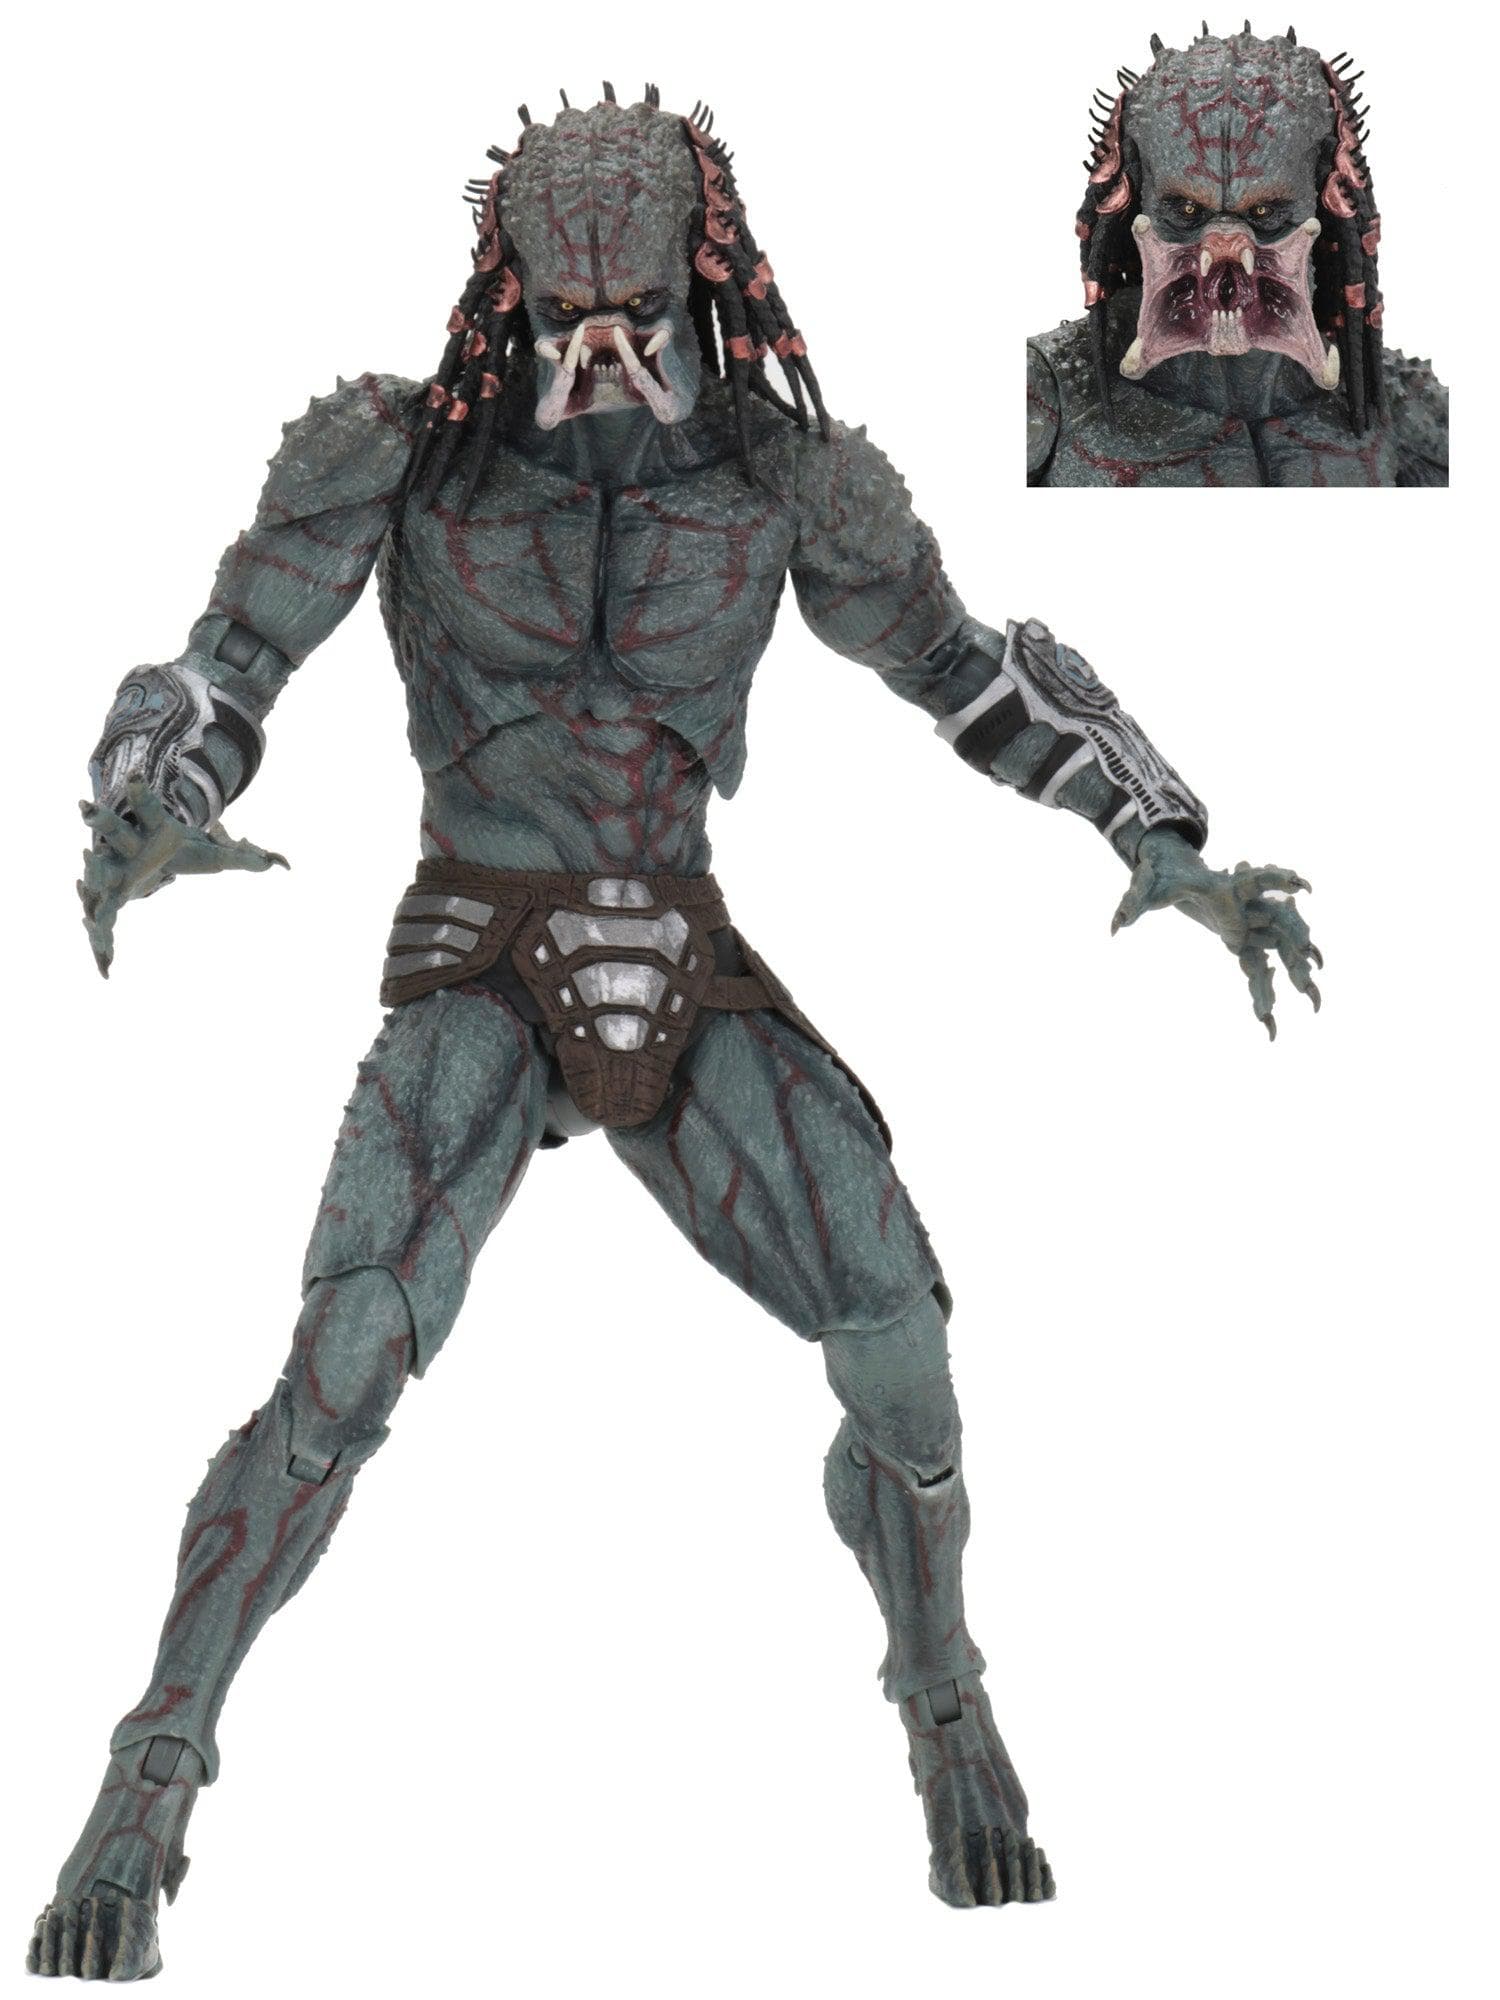 NECA - Predator (2018) - 7" Action Figure - Deluxe Armored Assassin Predator - costumes.com